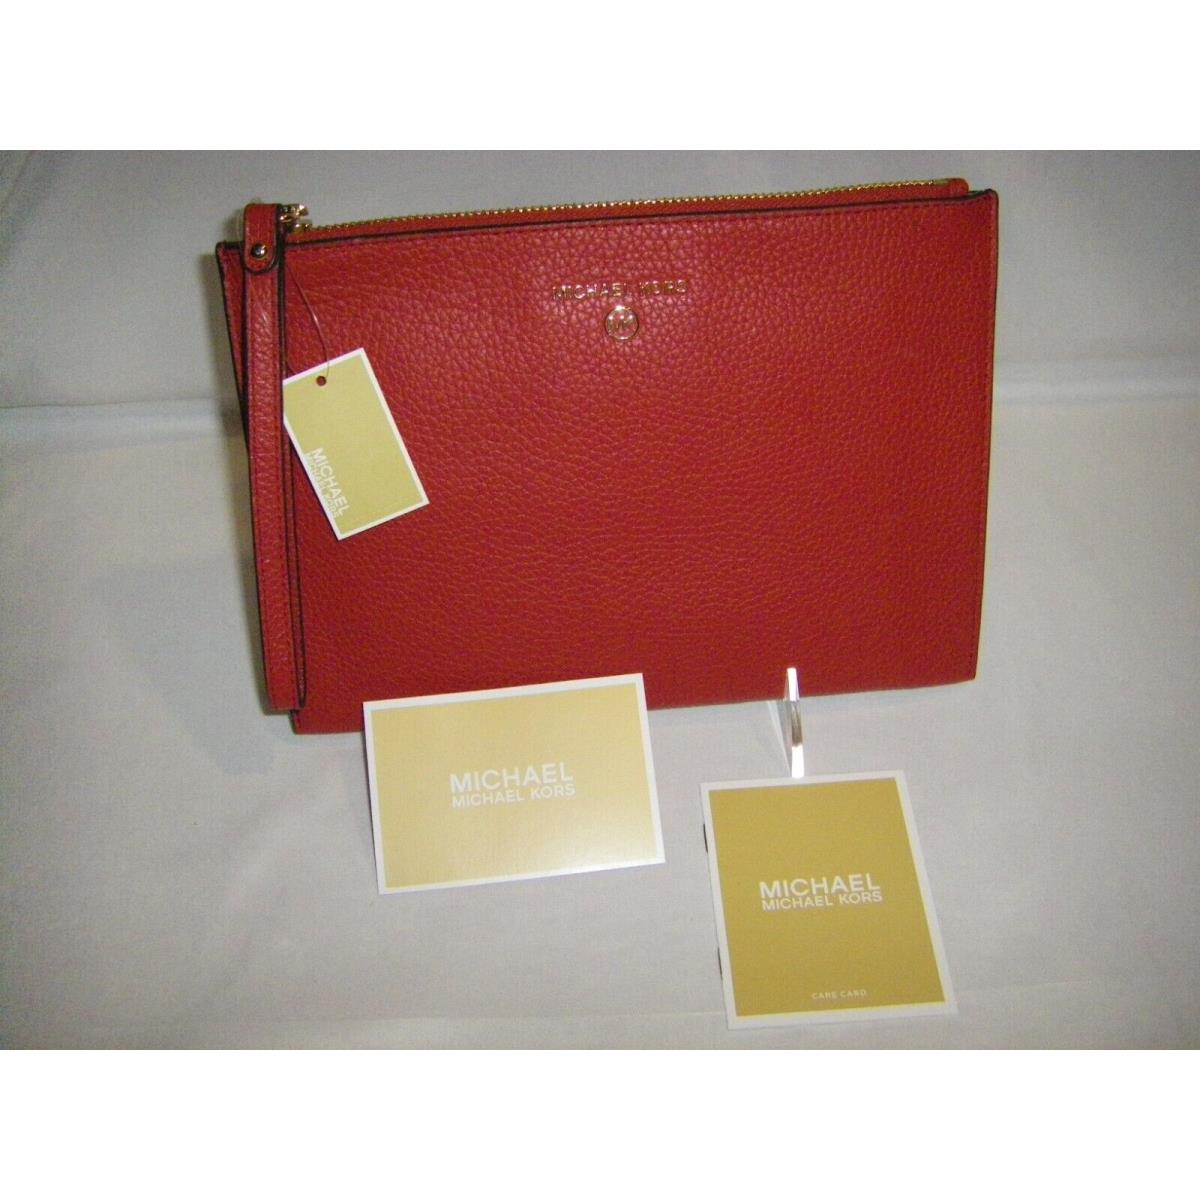 Michael Kors wallet  - Red 2